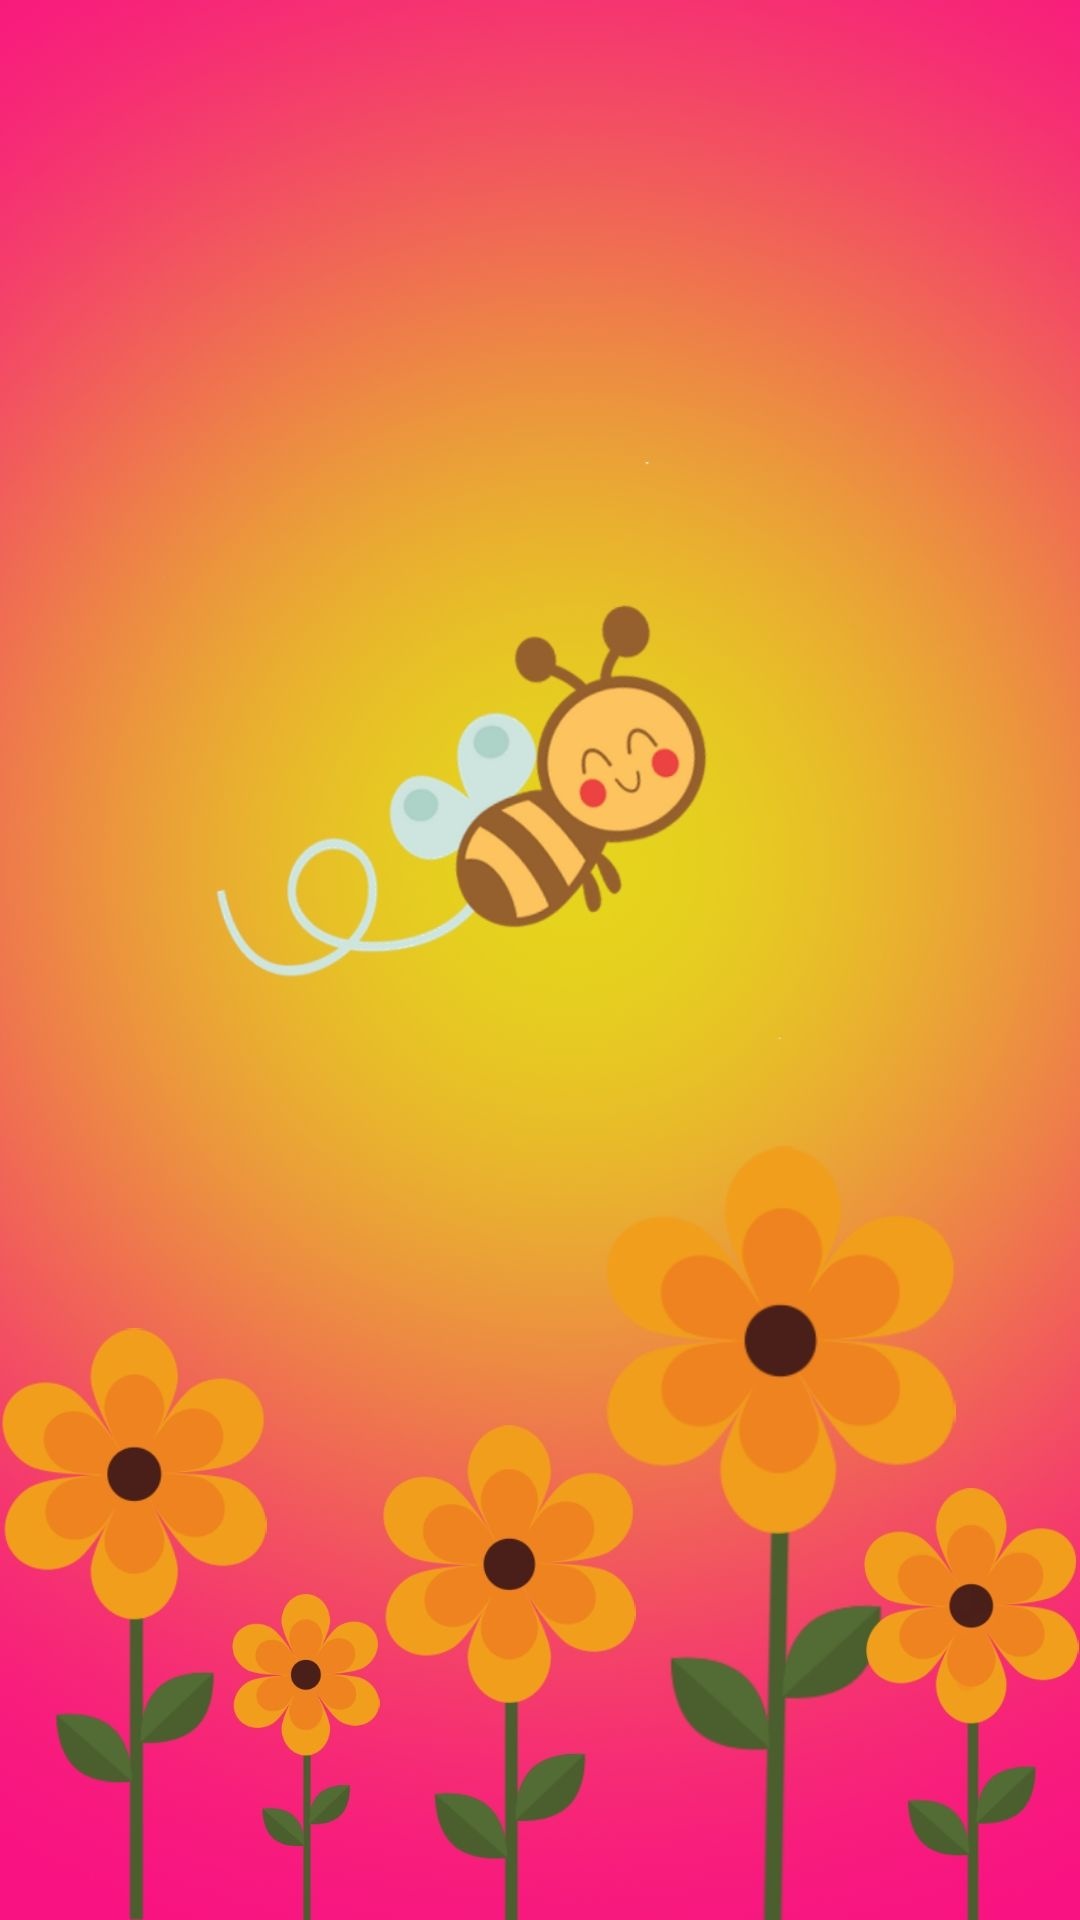 Bee: Honeybee, Cartoon character, Illustration. 1080x1920 Full HD Background.